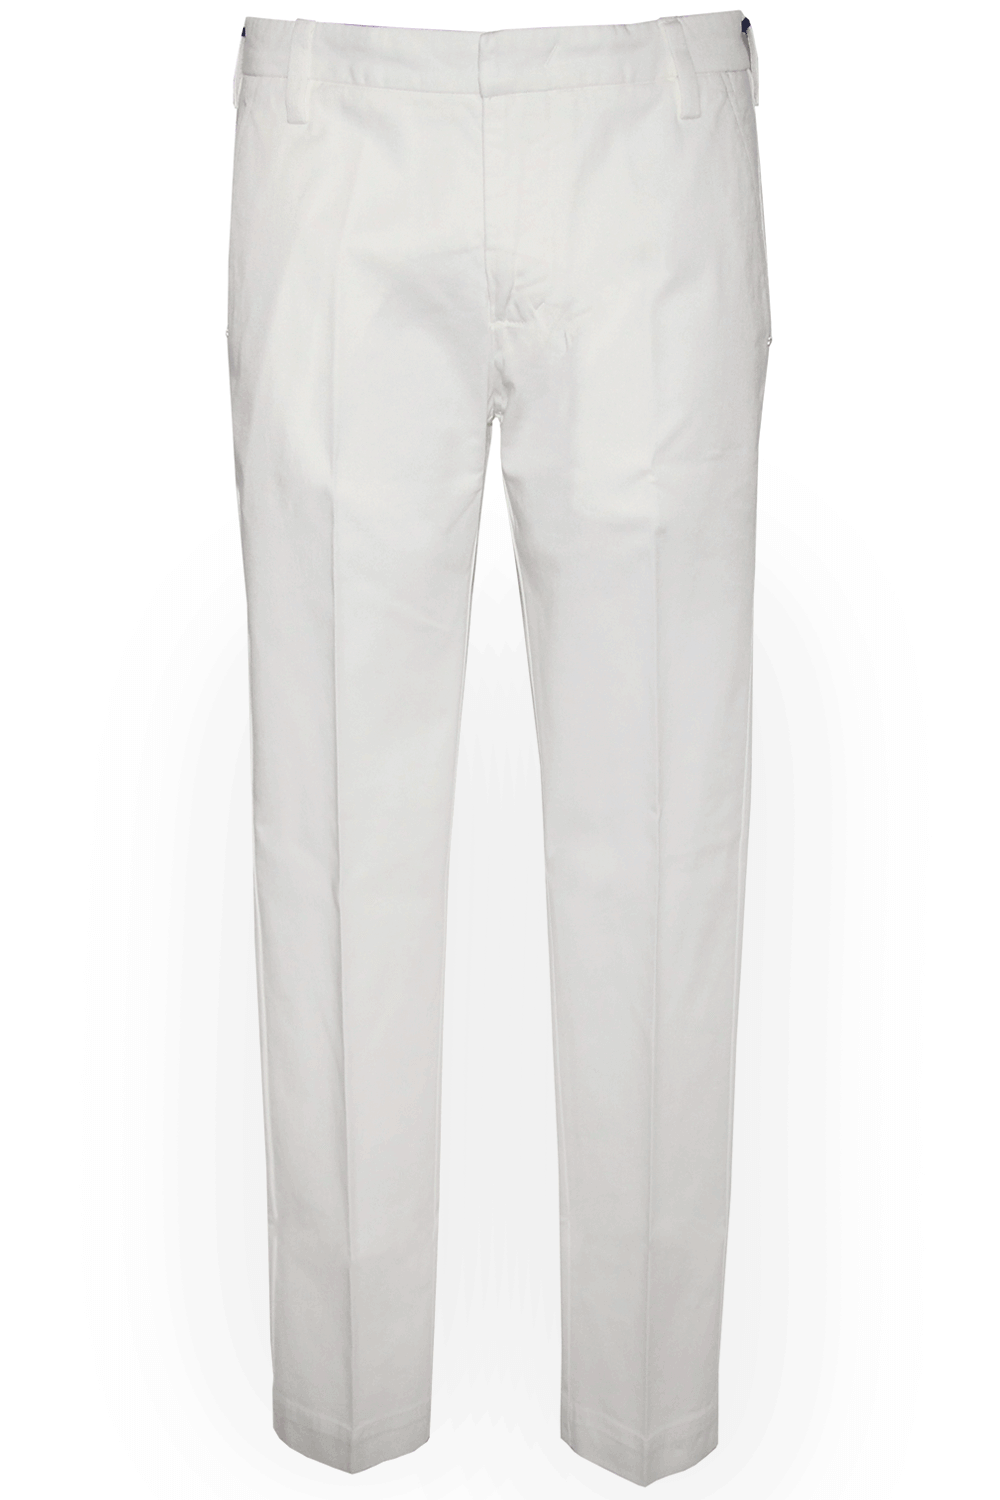 Image of Pantalone bianco-ENTRE AMIS